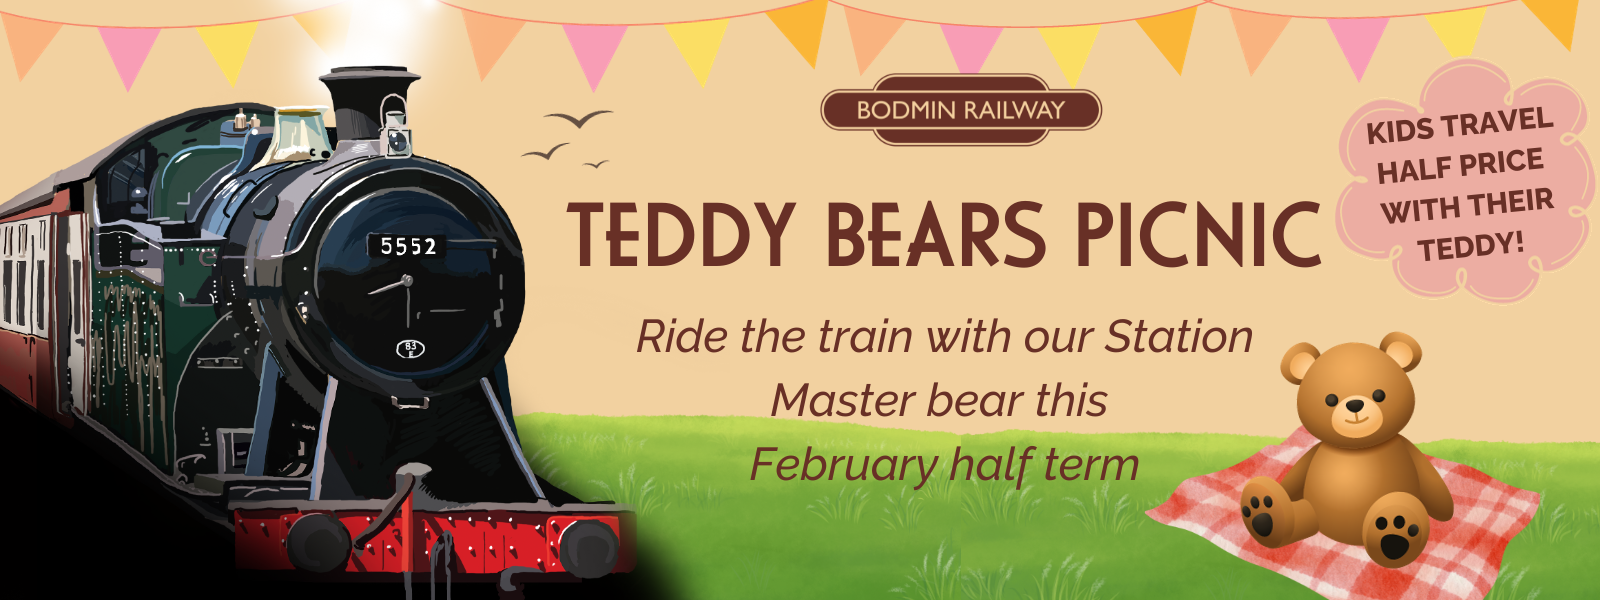 Bodmin Railway teddy bear picnic